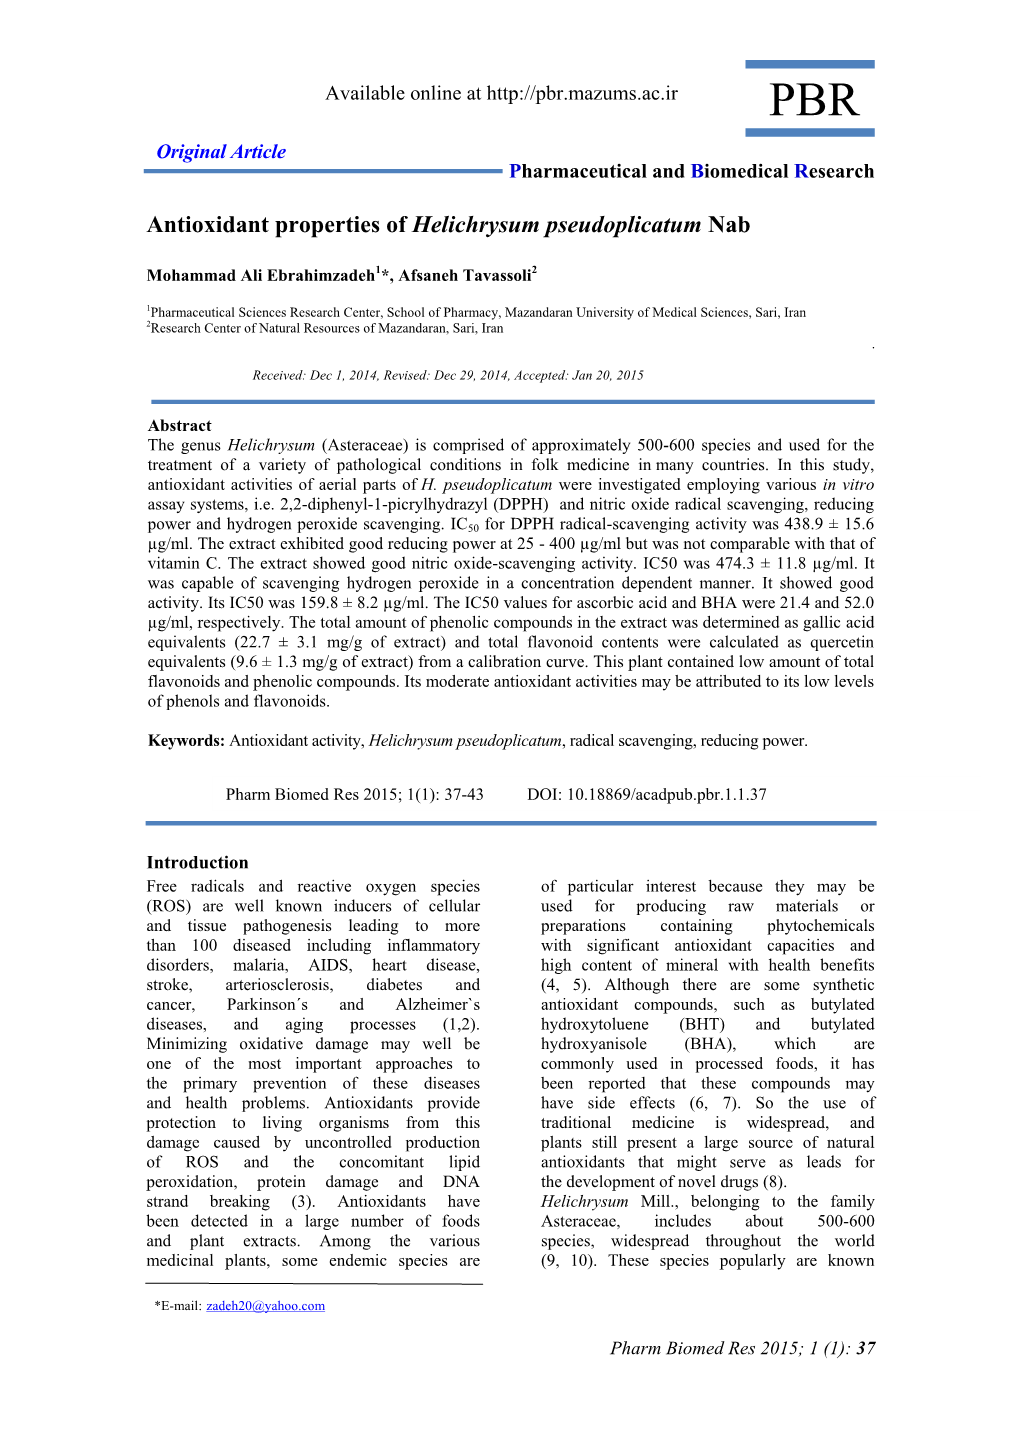 Antioxidant Properties of Helichrysum Pseudoplicatum Nab